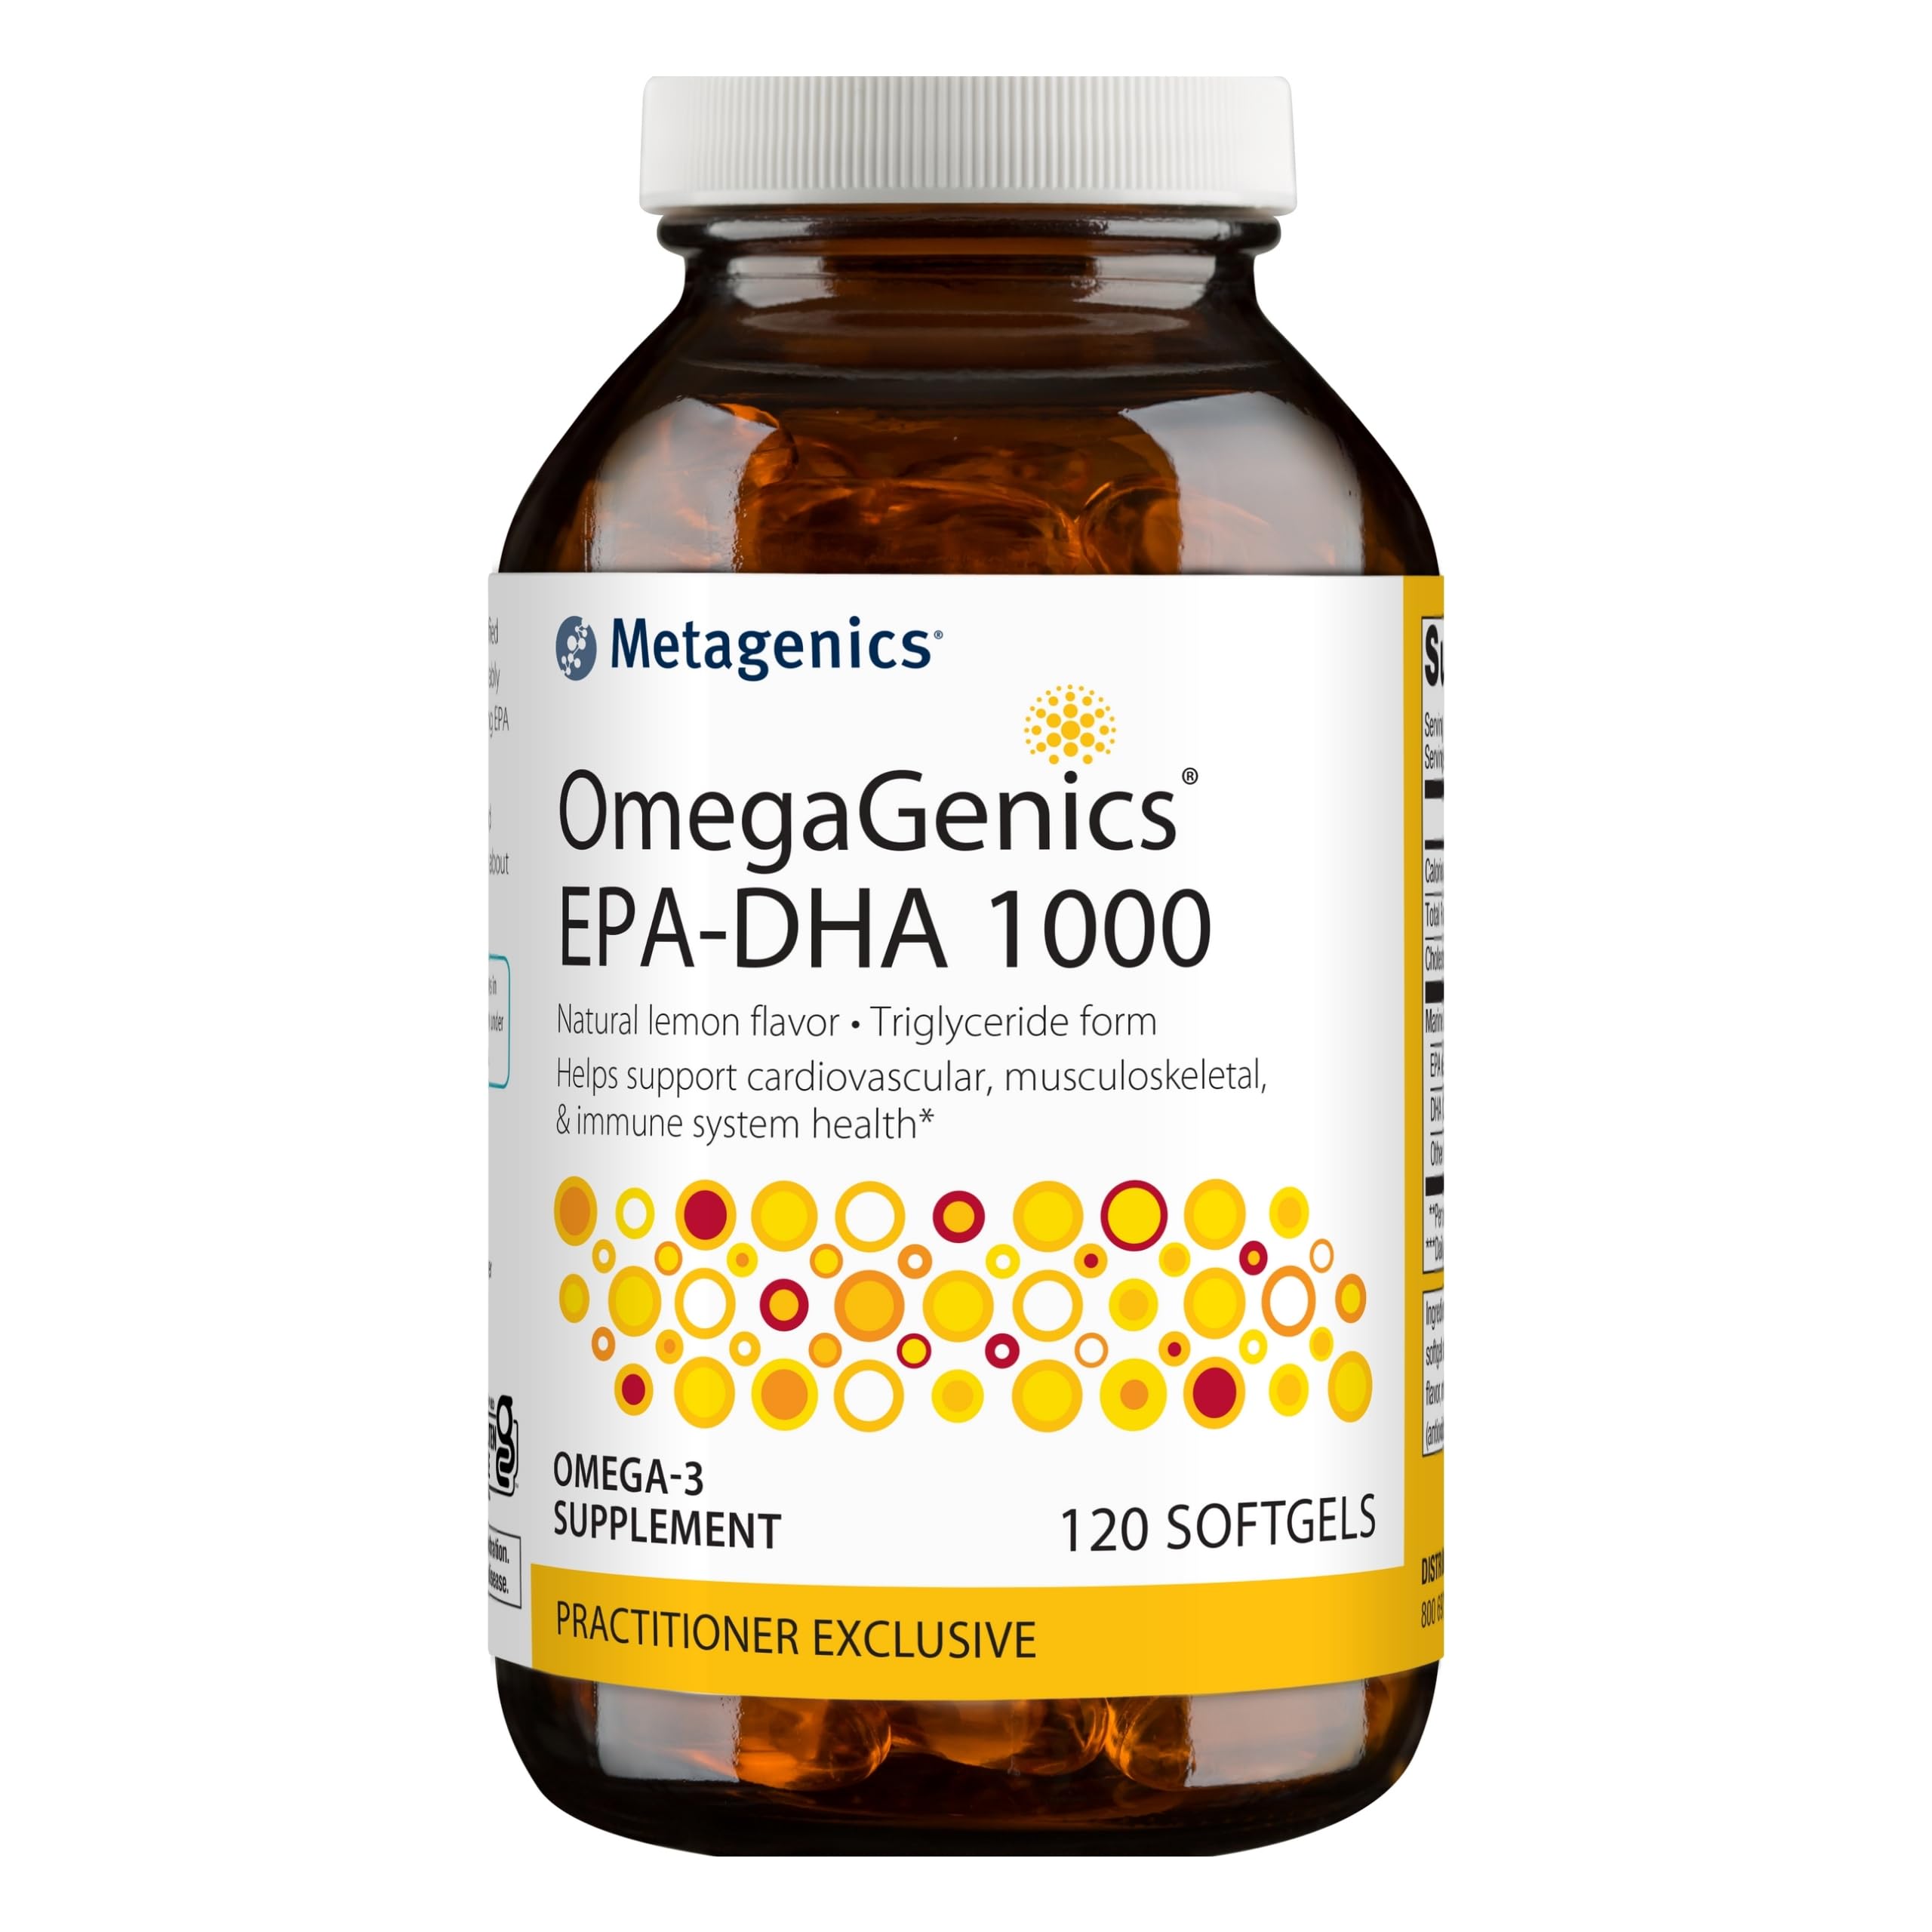 Metagenics OmegaGenics EPA-DHA 1000 Heart & Immune Health - 120 Softgels